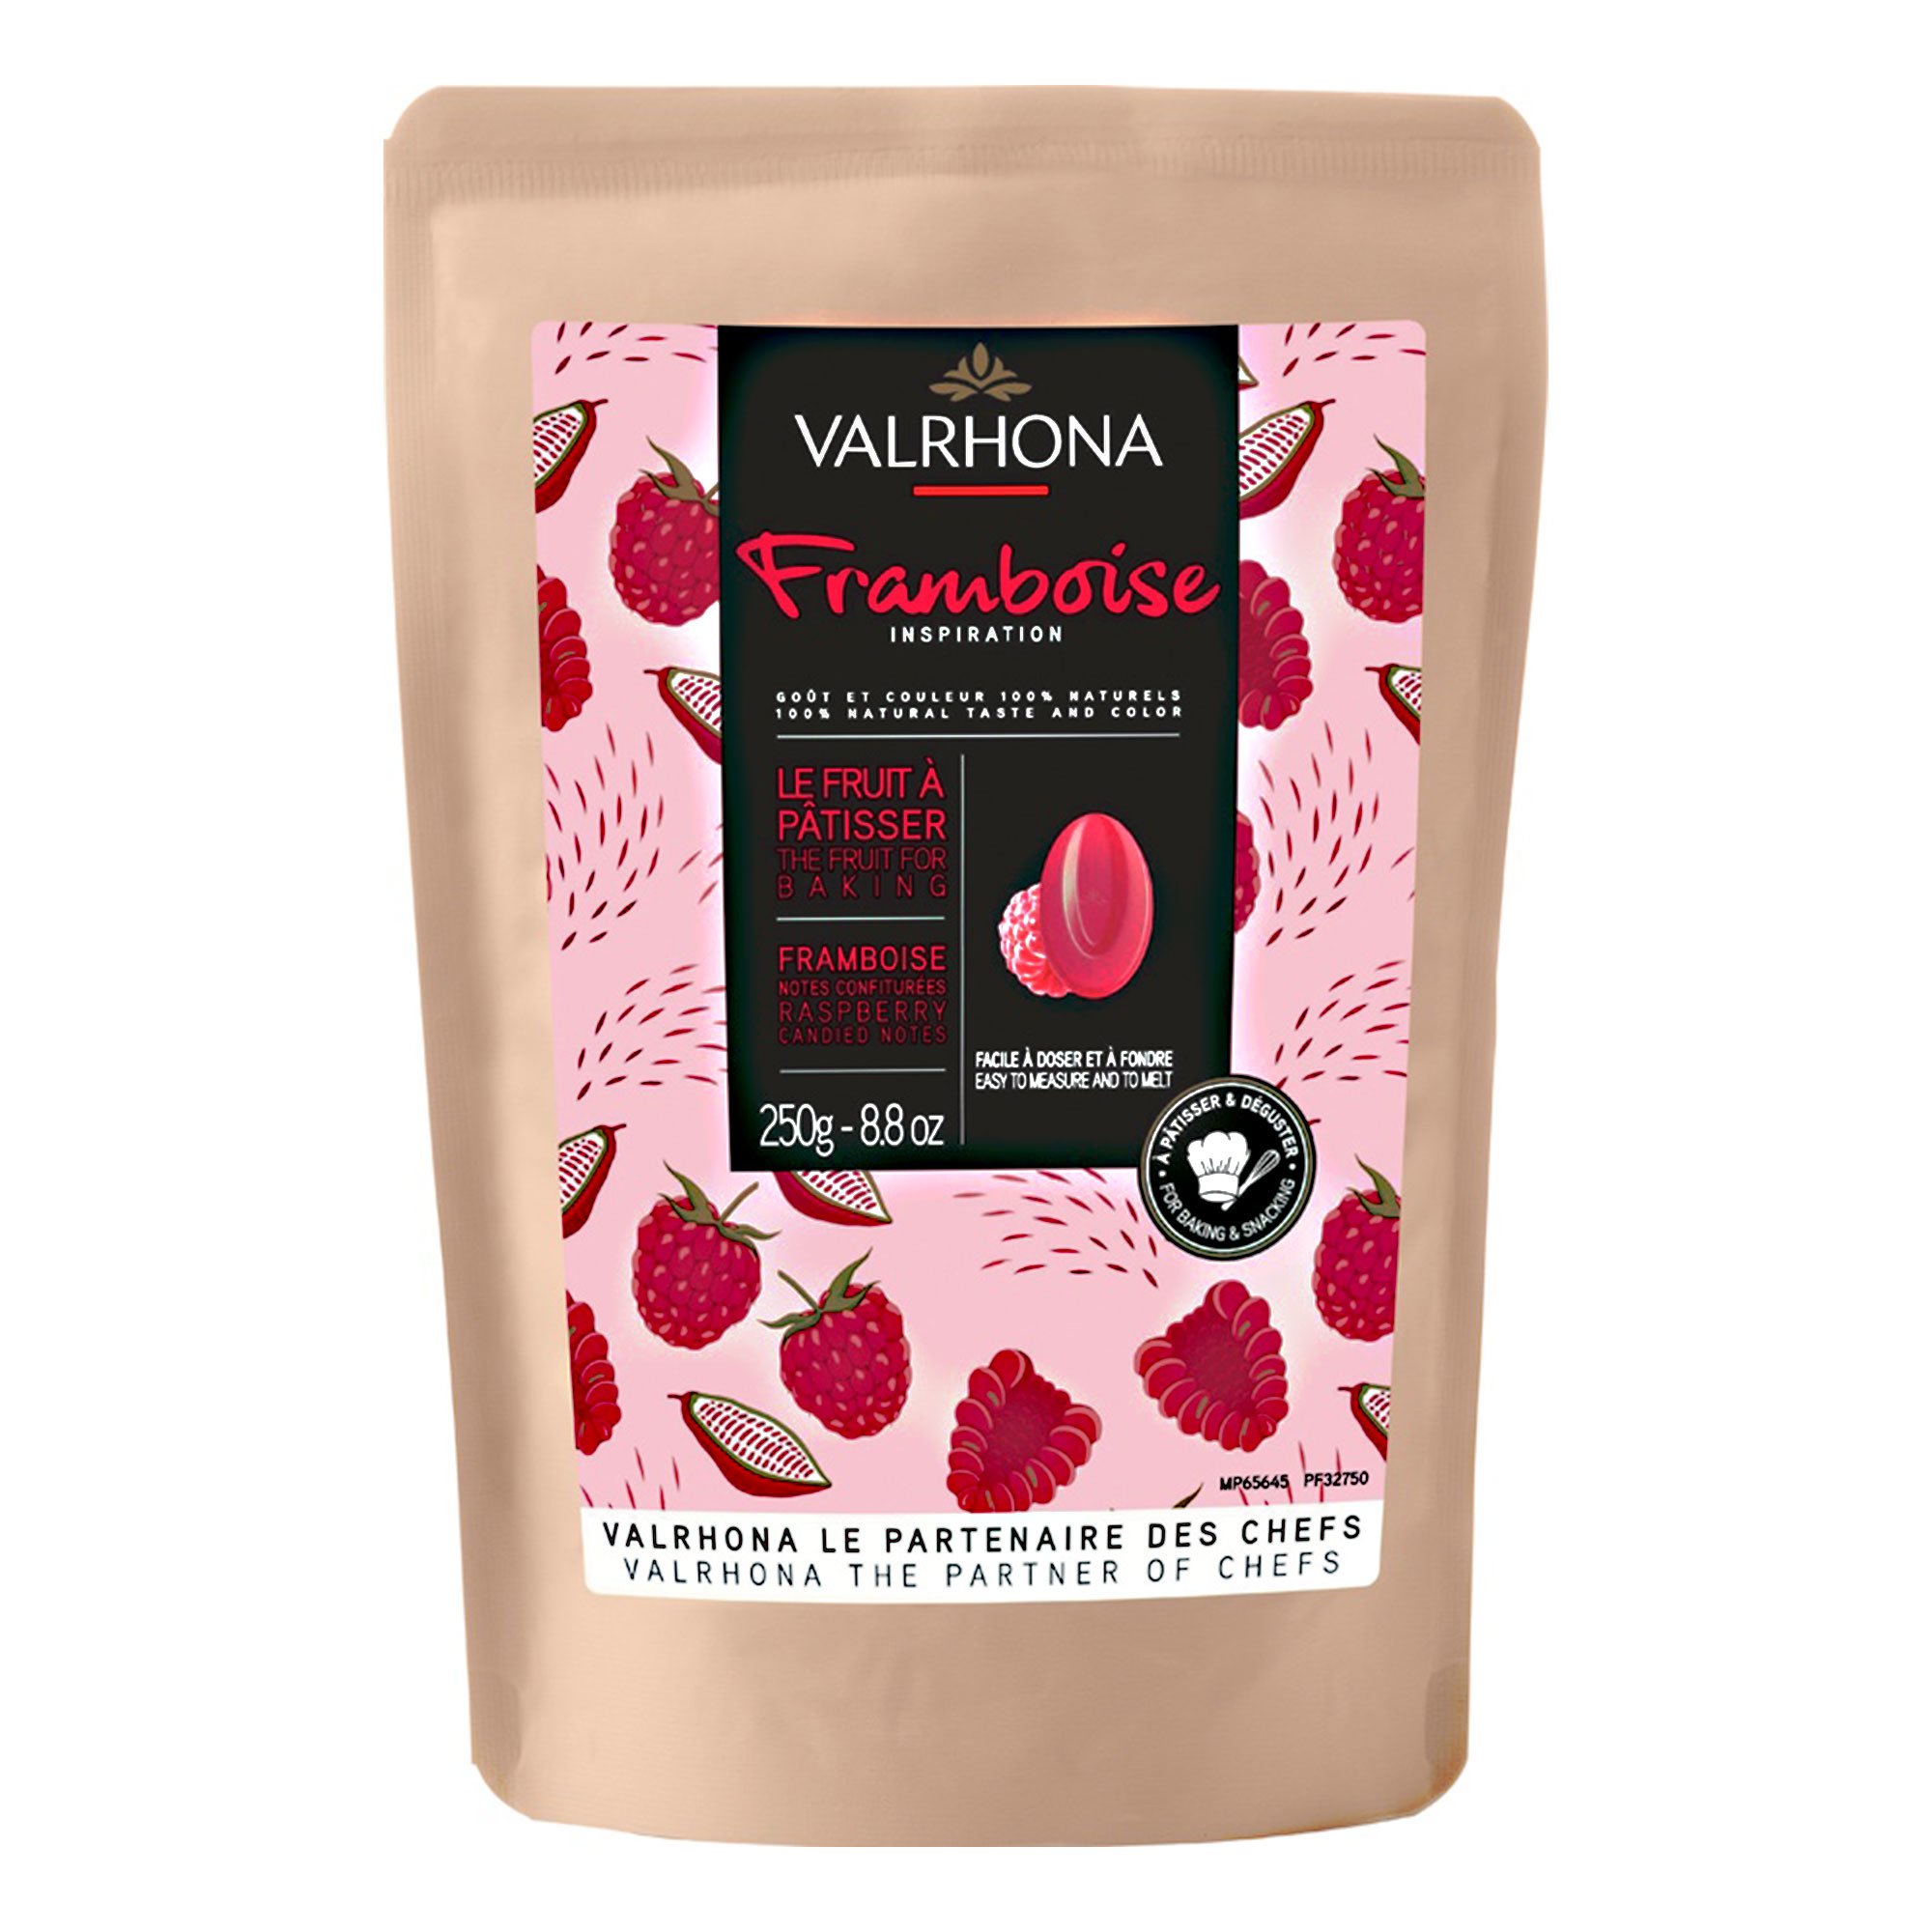 Valrhona Inspiration Hallon choklad 250 g